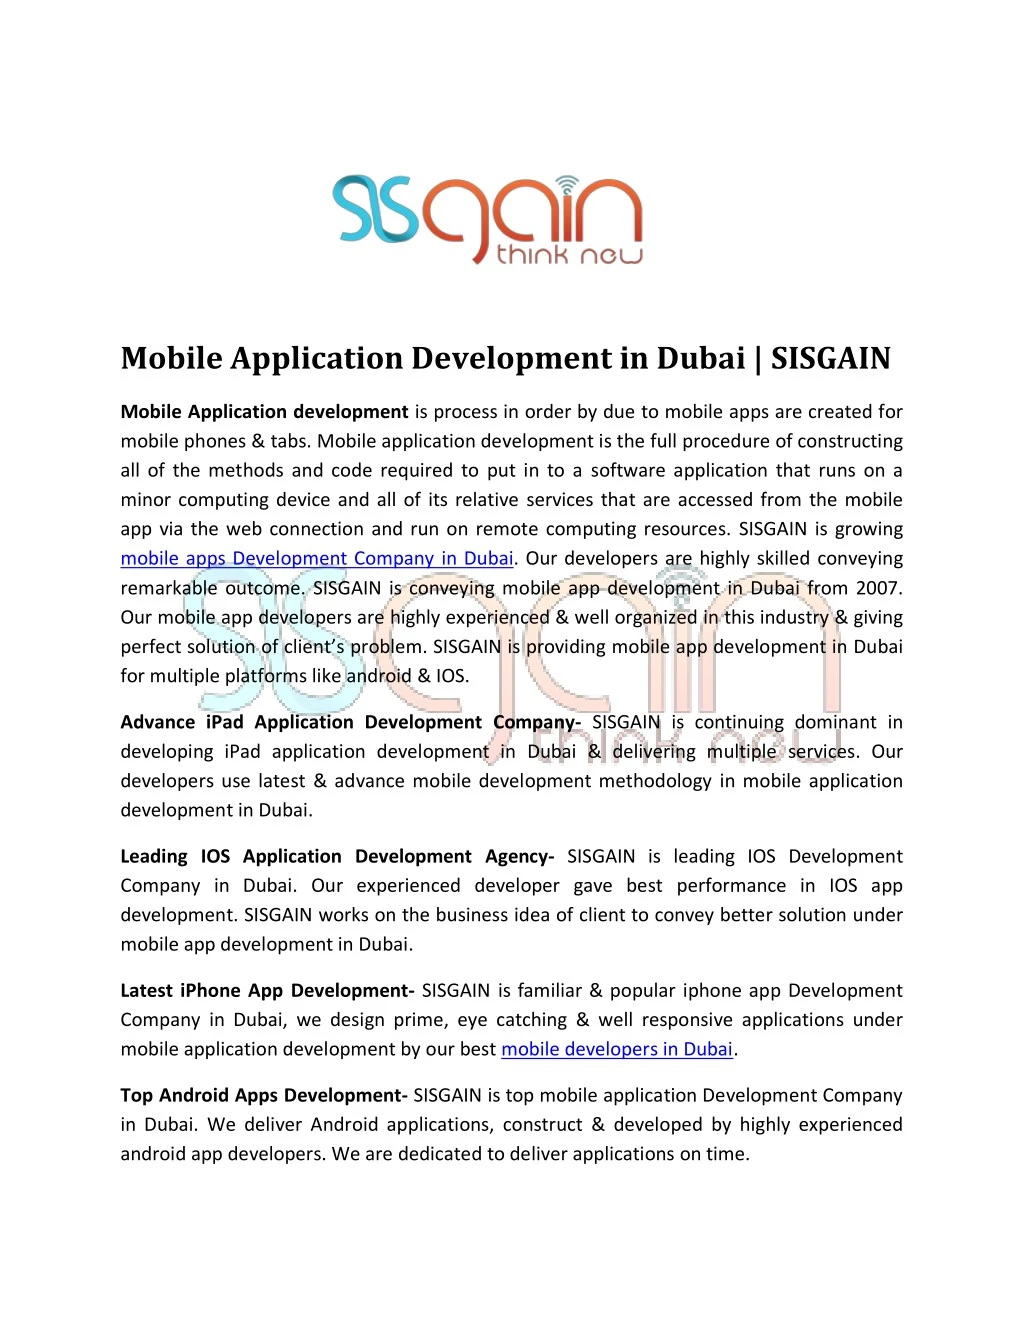 mobile application development in dubai sisgain